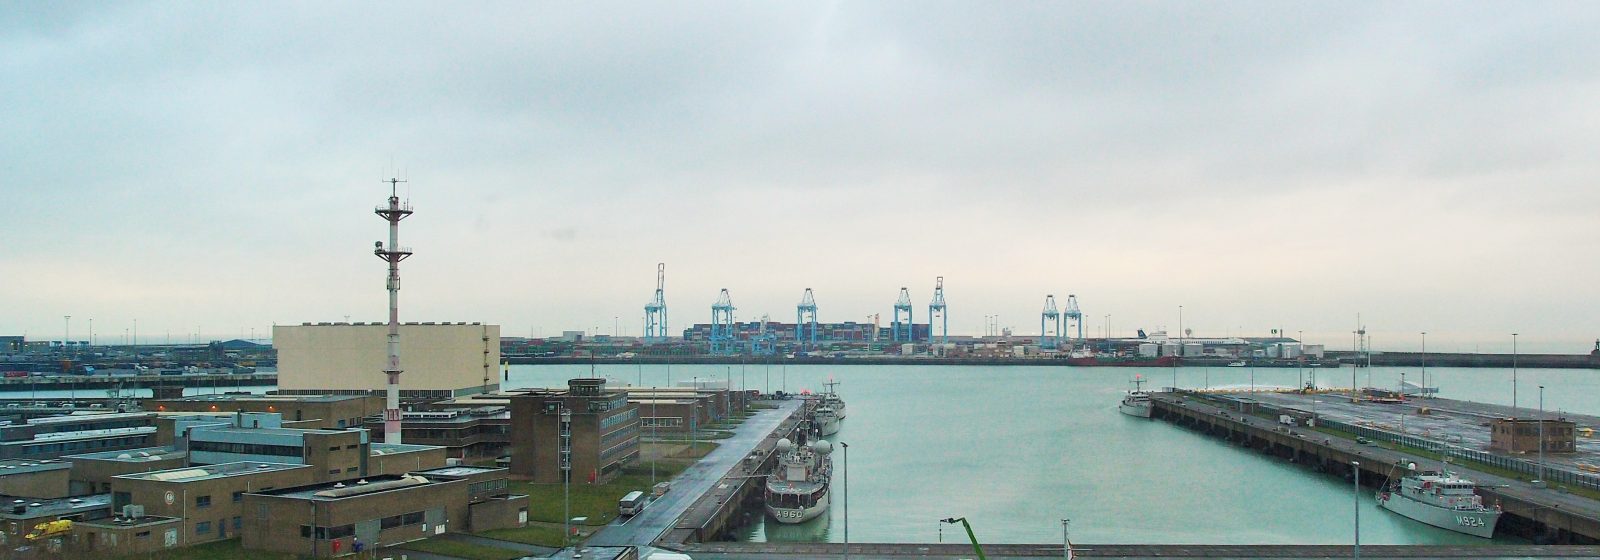 Marinebasis Zeebrugge